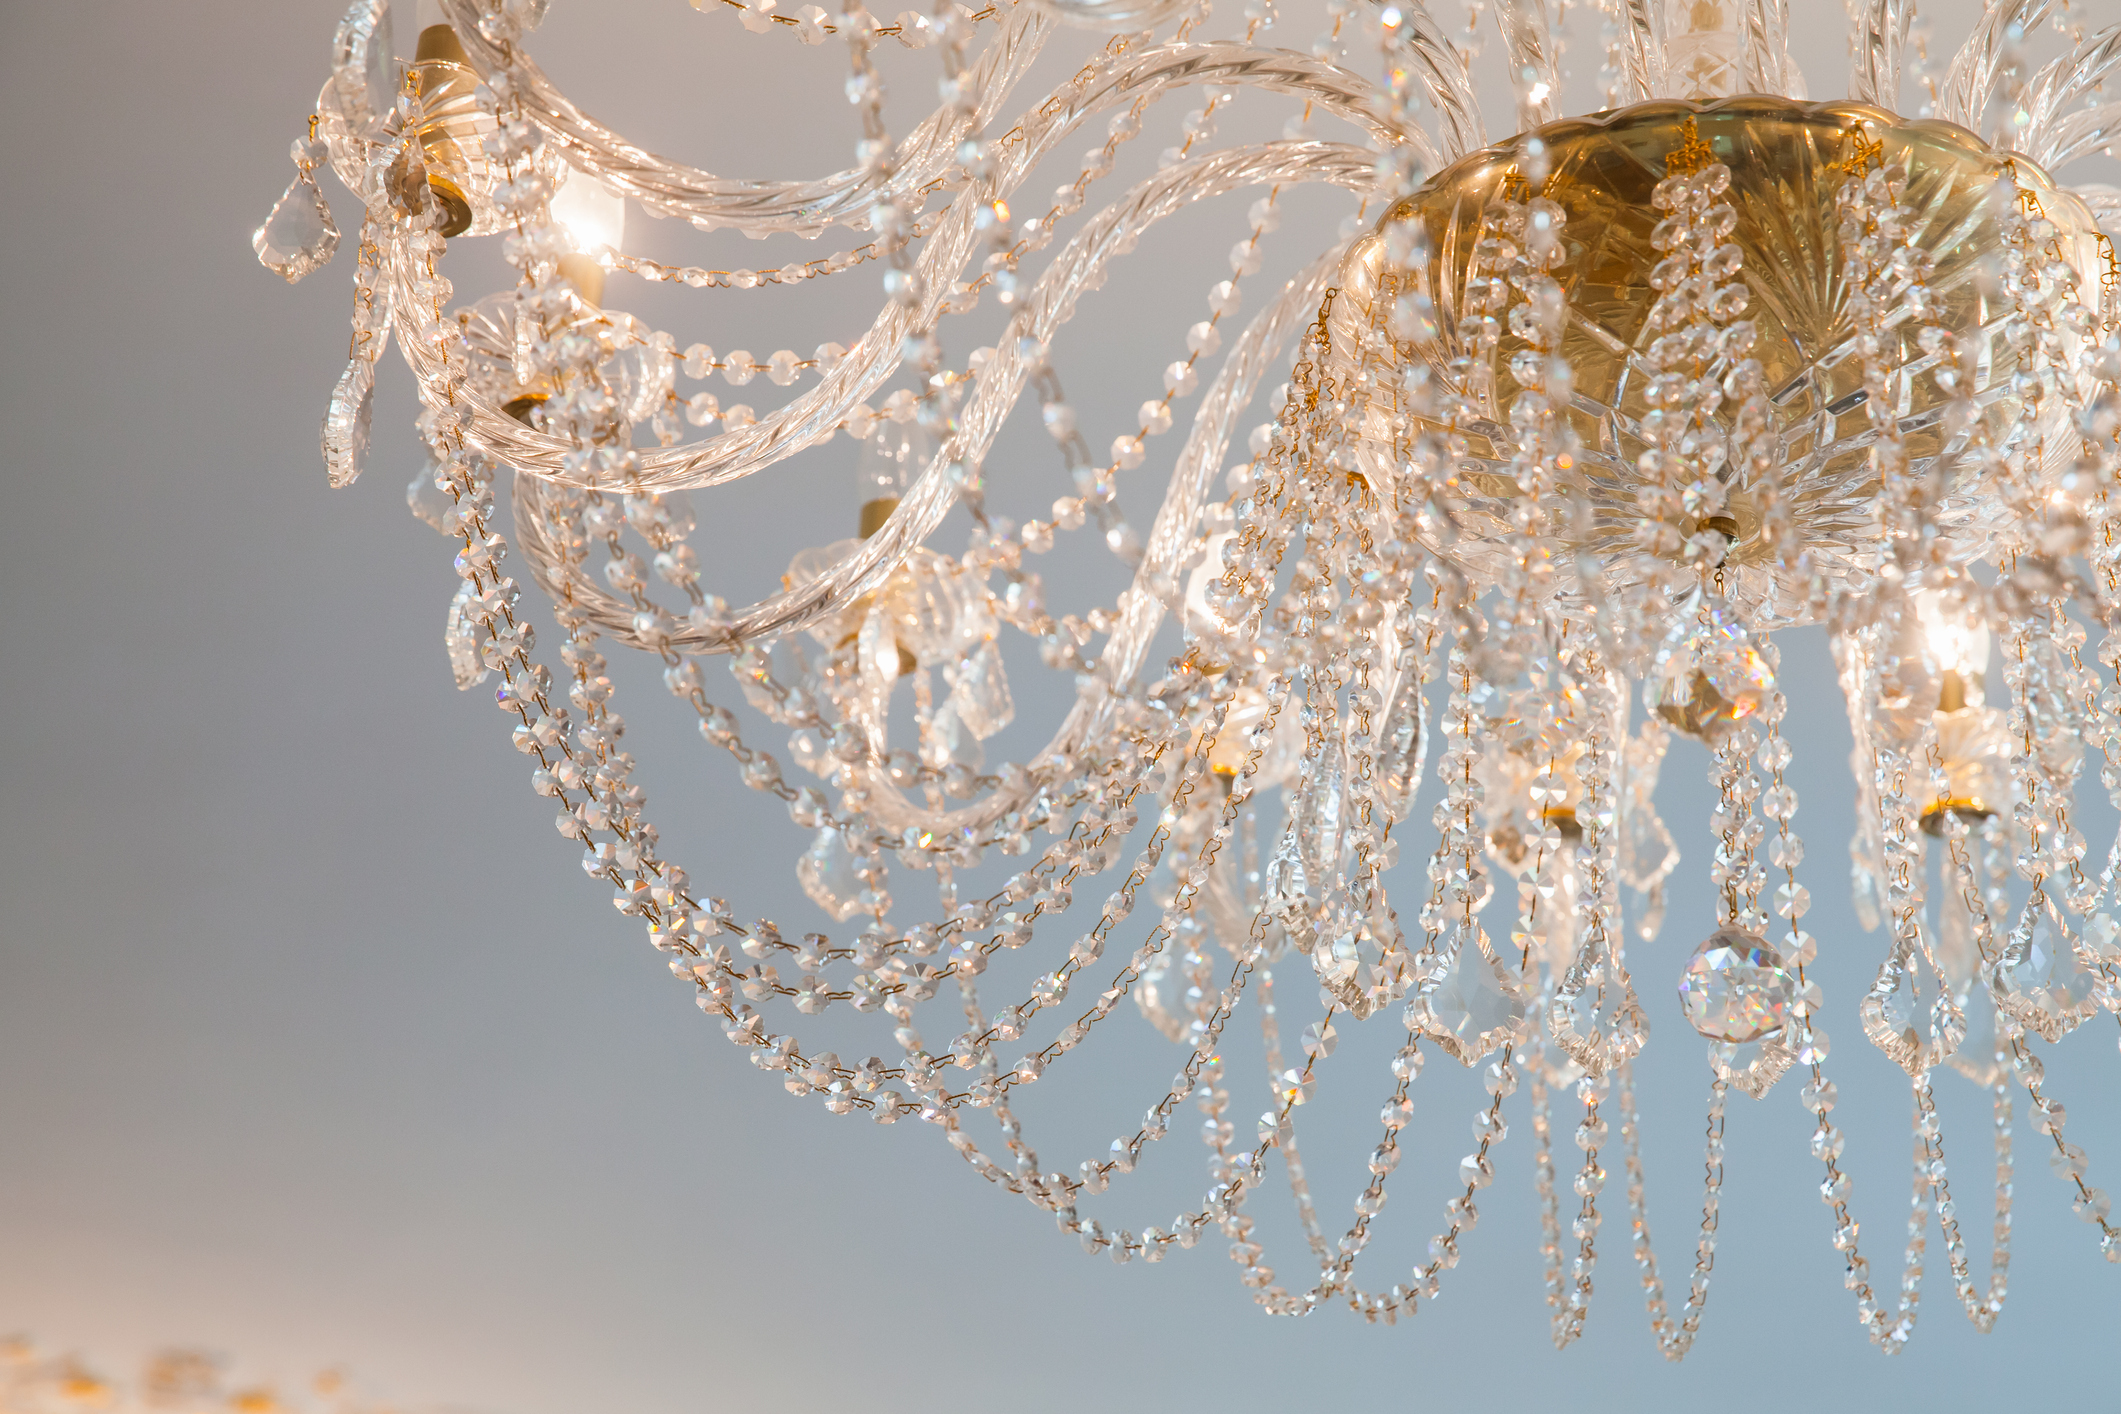 Luxury vintage chandelier, close-up photo